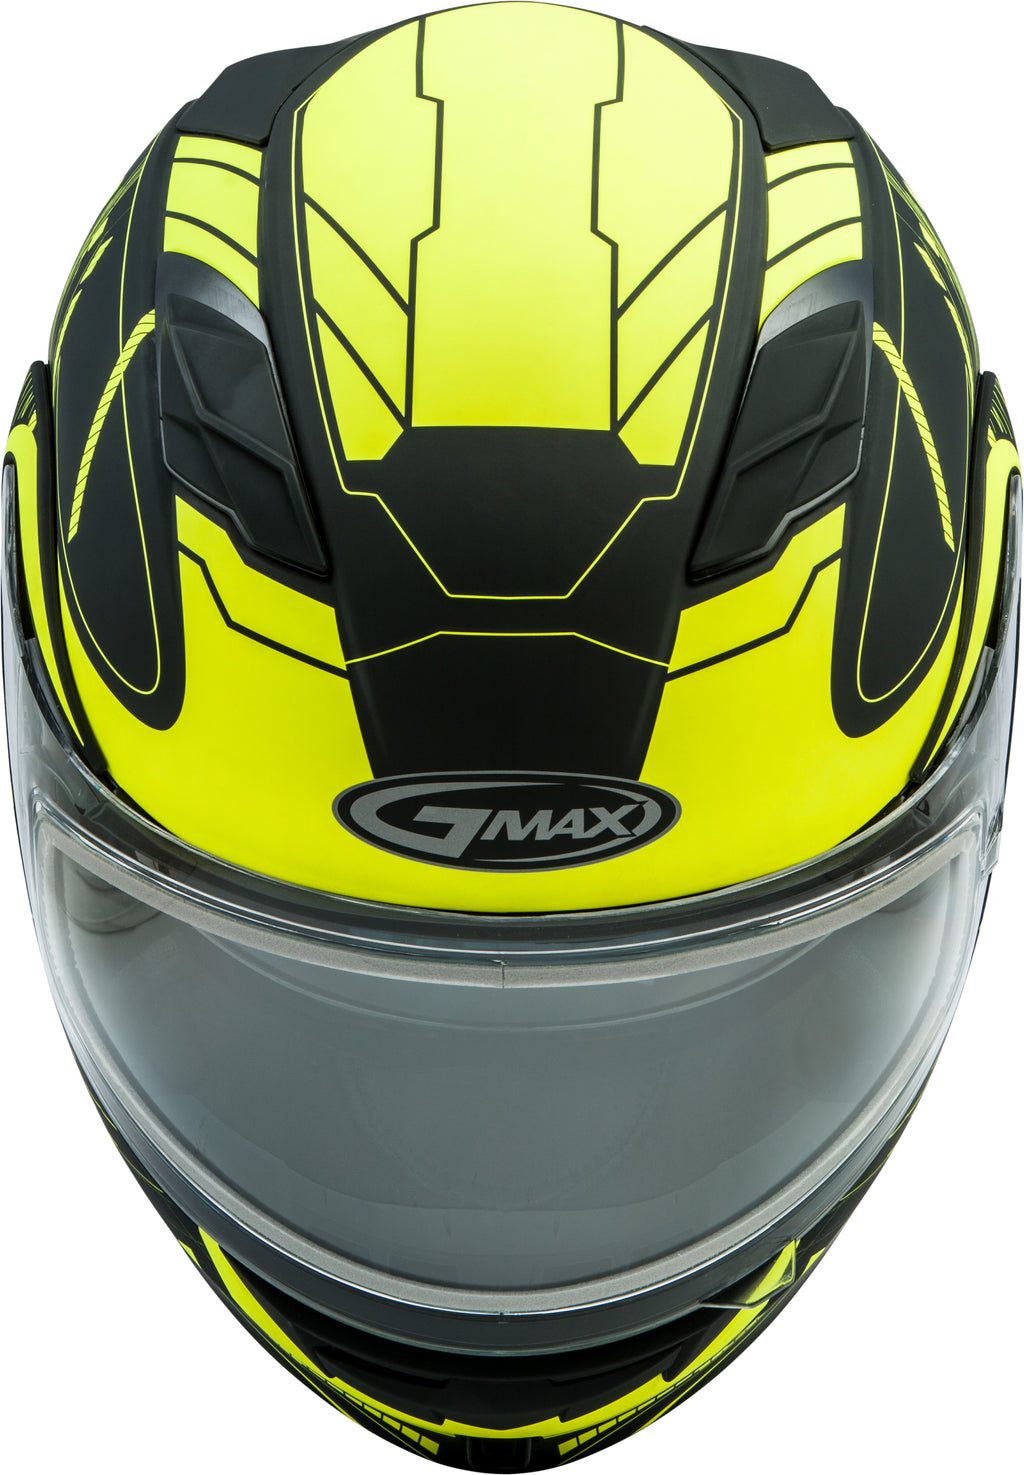 Md 01s Modular Wired Snow Helmet Black/Hi Vis 3x